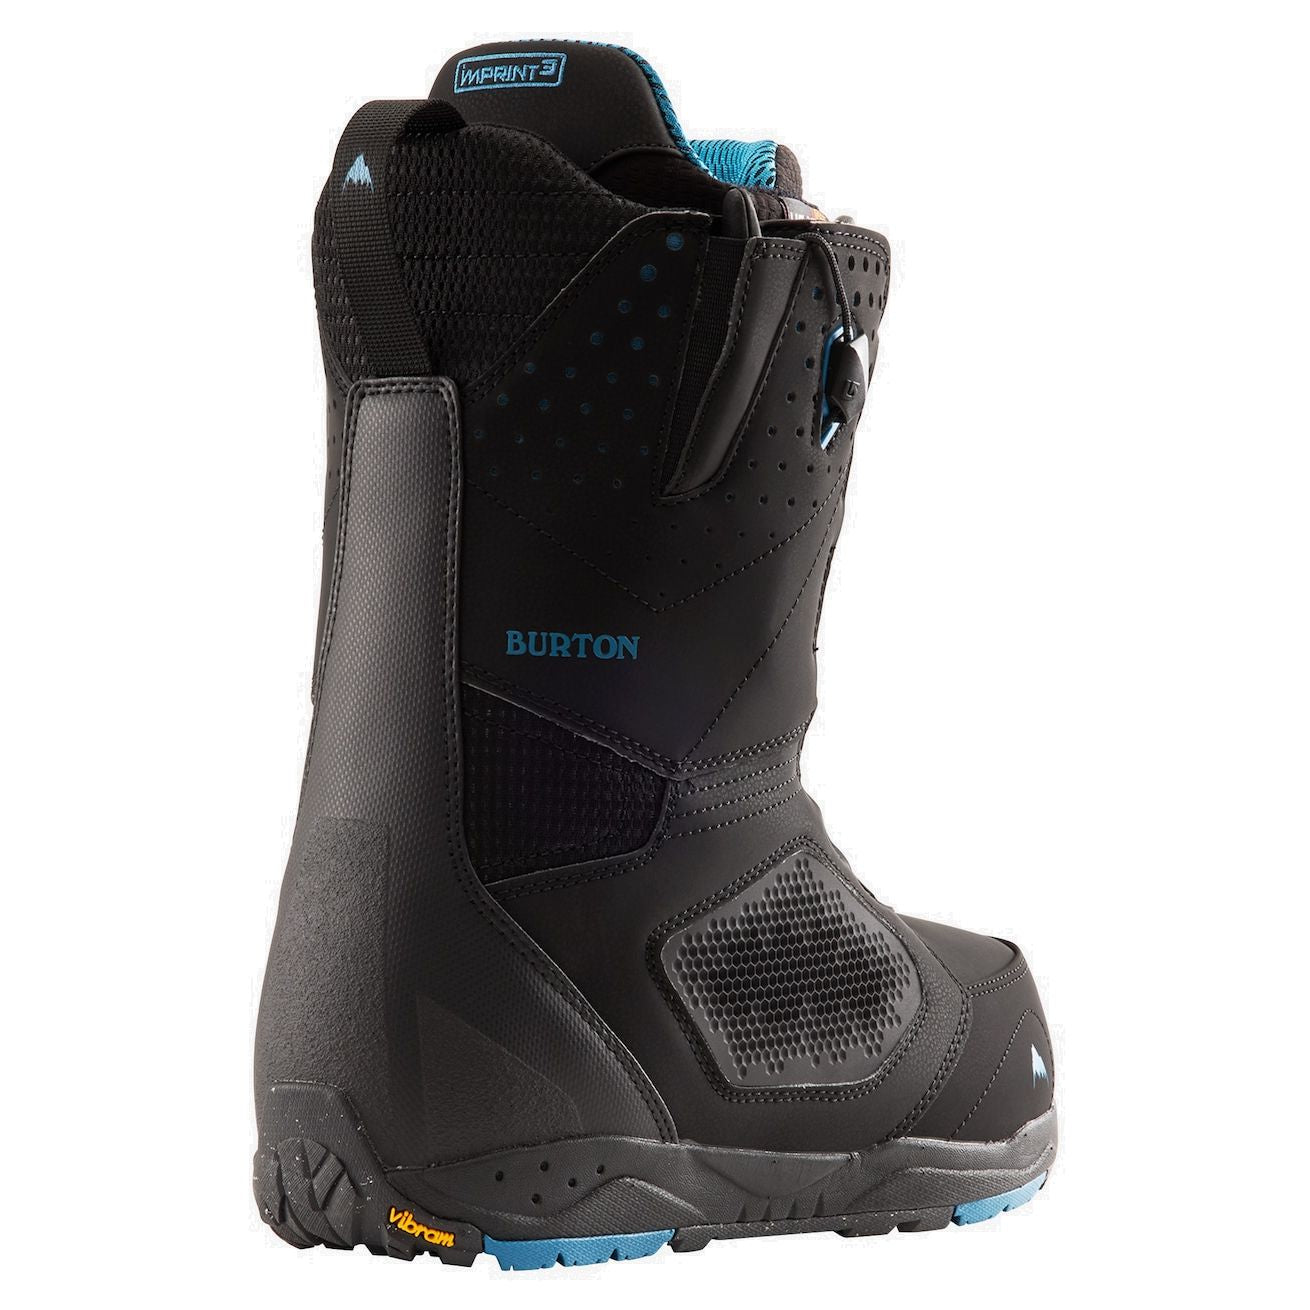 Men's Burton Photon Snowboard Boots Black Snowboard Boots